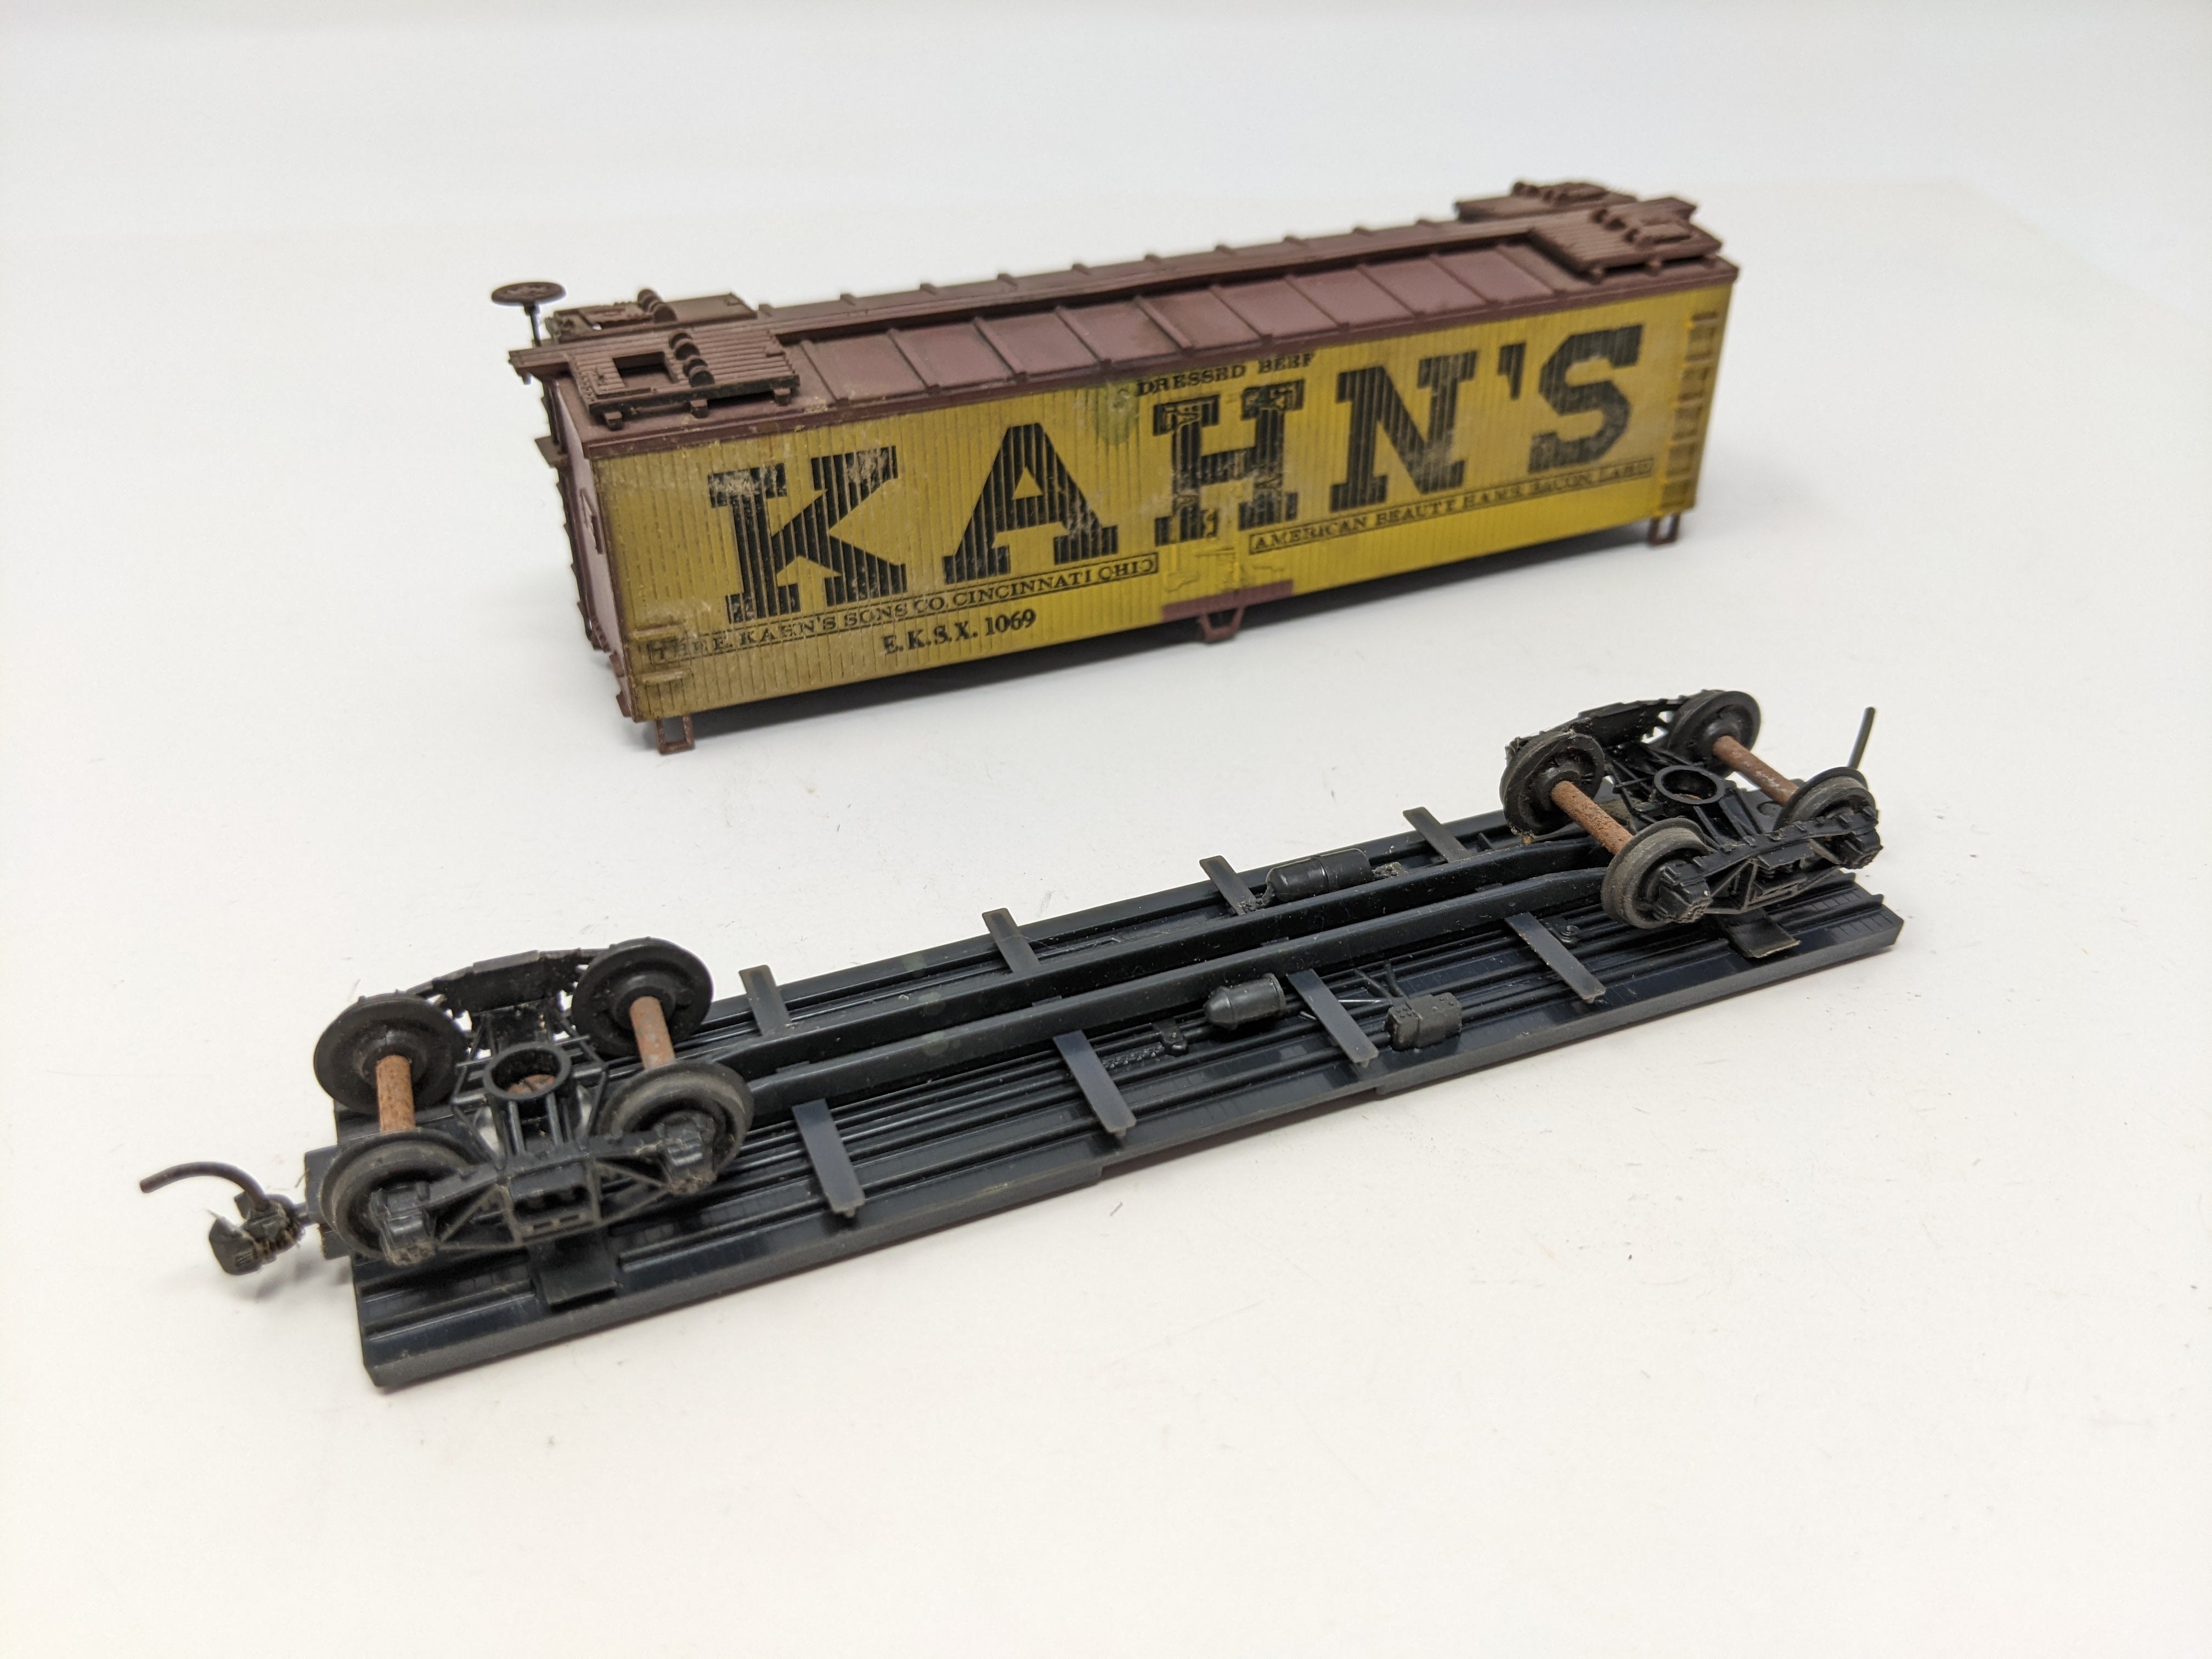 USED HO Scale, 40' Wooden Reefer Box Car, Kahn's Beef EKSX #1069, Read Description